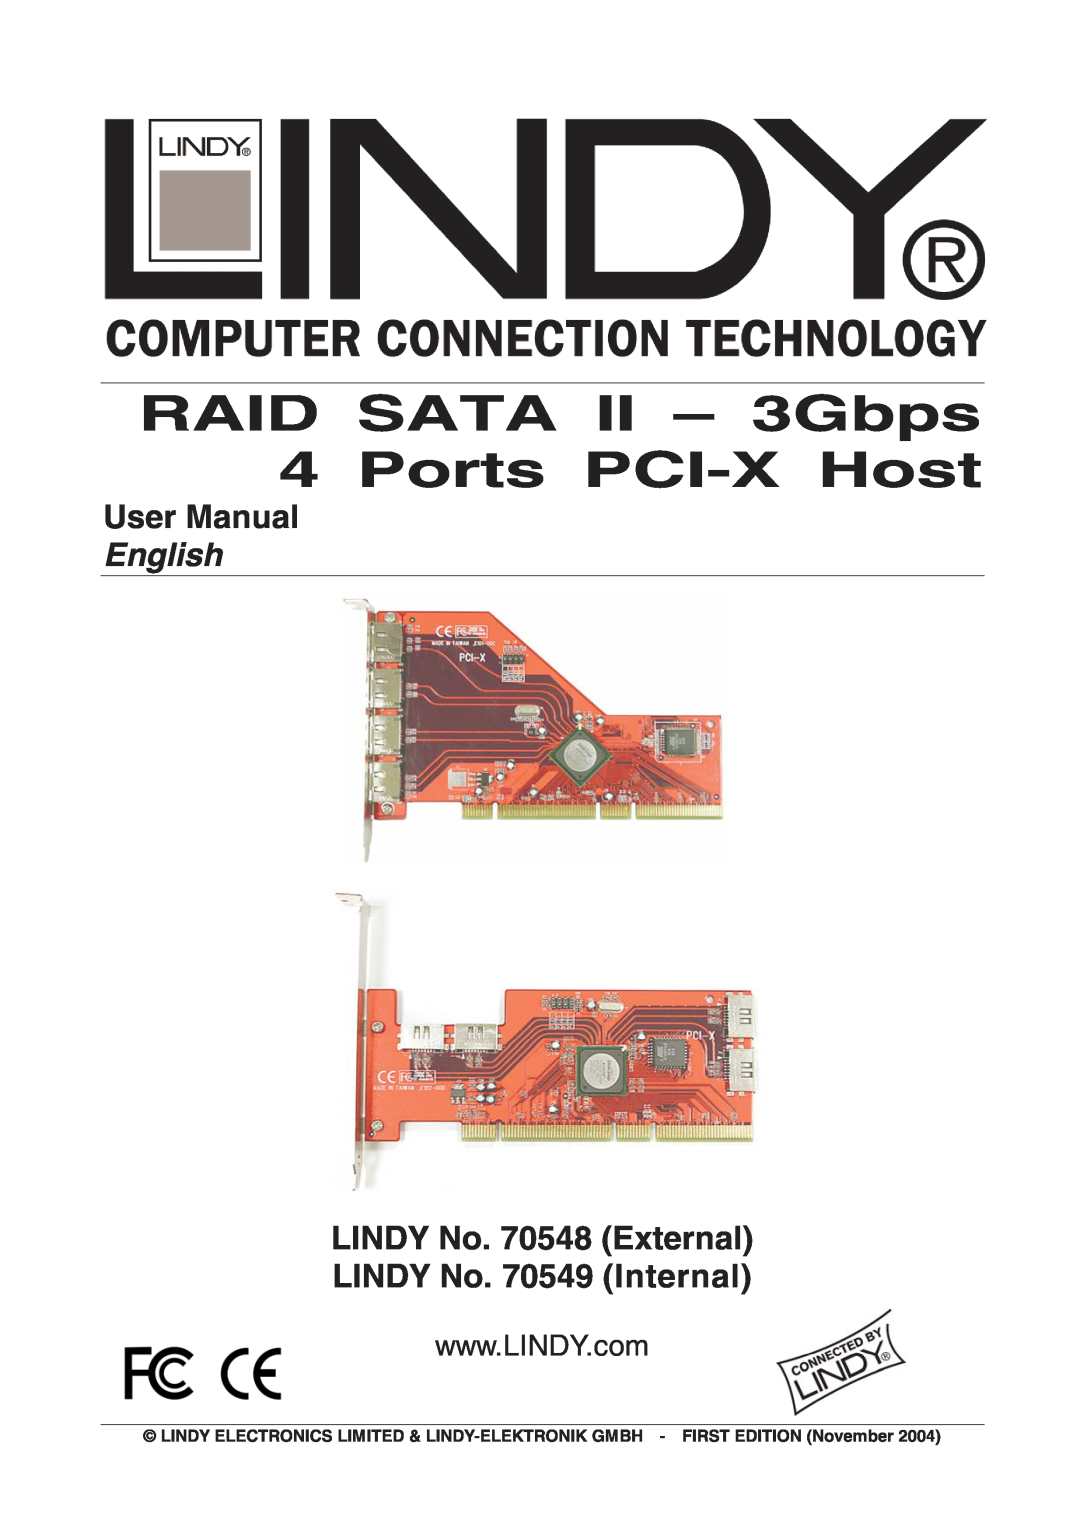 Lindy user manual User Manual, LINDY No. 70548 External LINDY No. 70549 Internal, English 